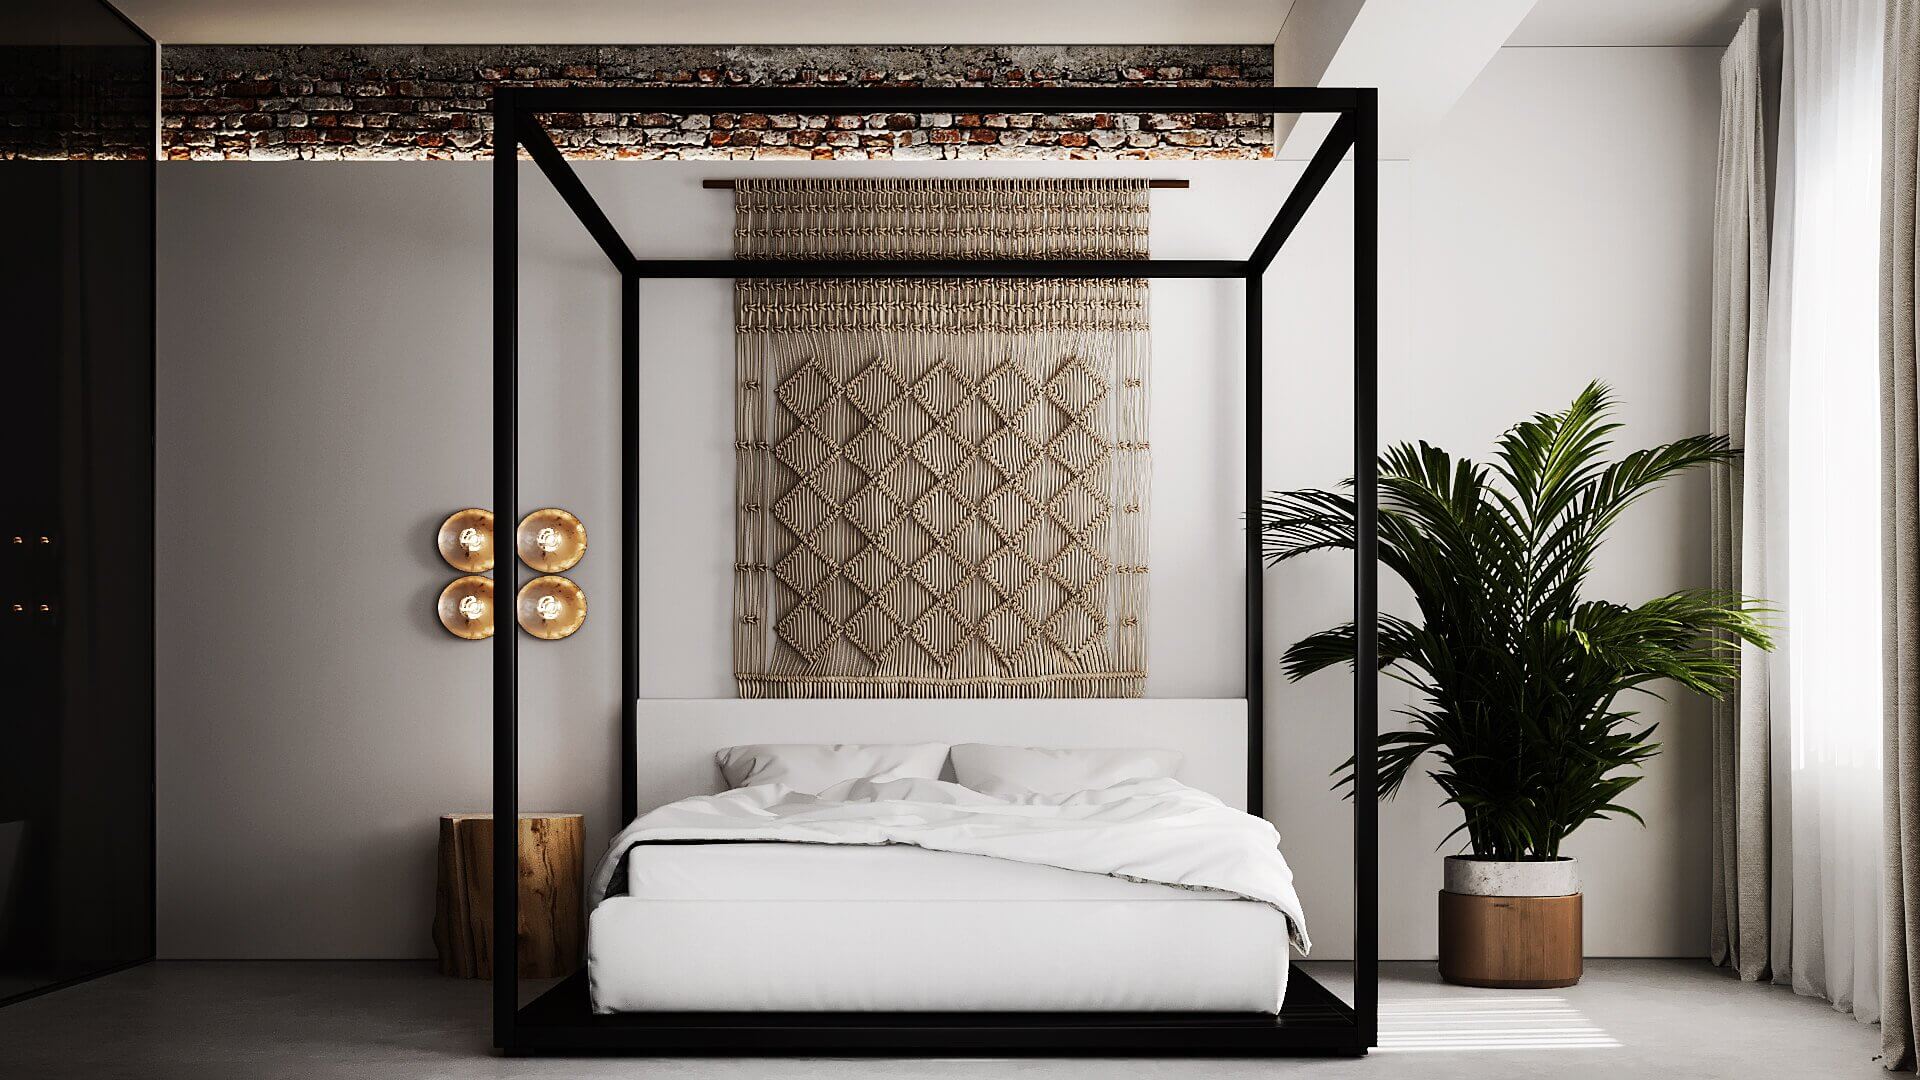 Oasis Apartment bedroom design cozy - cgi visualization